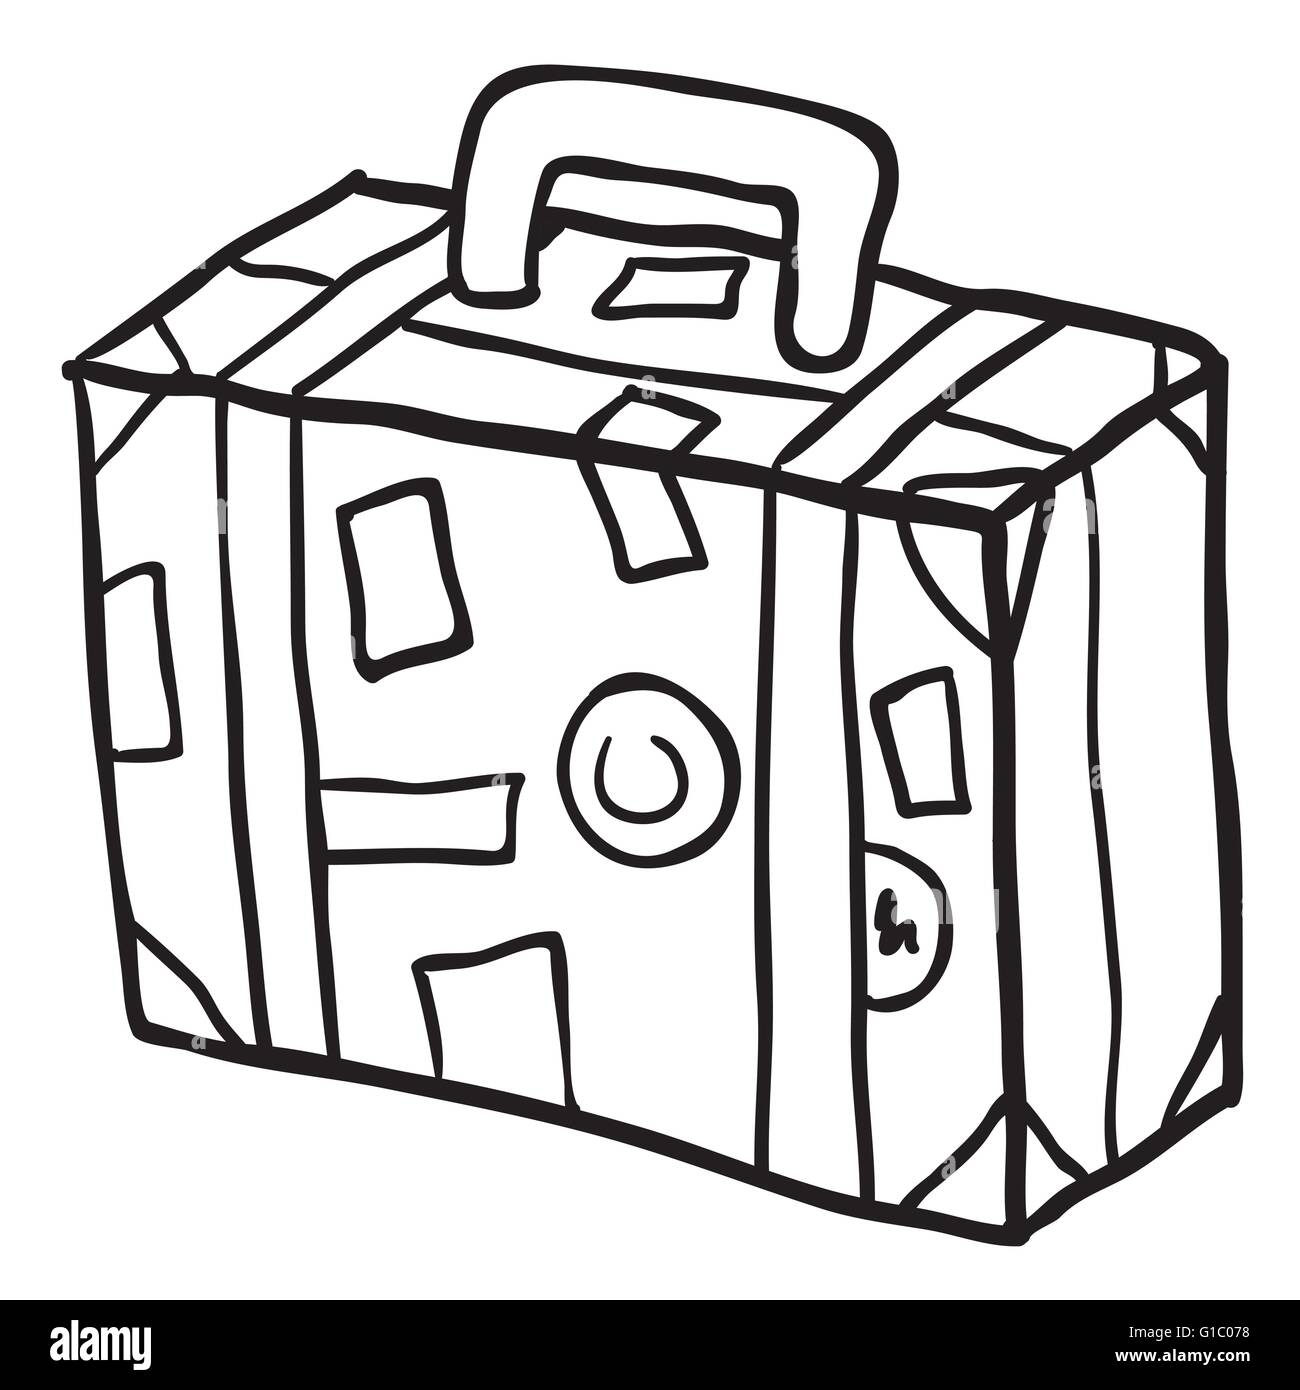 einfache Schwarz-weiß Reise Koffer Cartoon doodle Stock-Vektorgrafik - Alamy